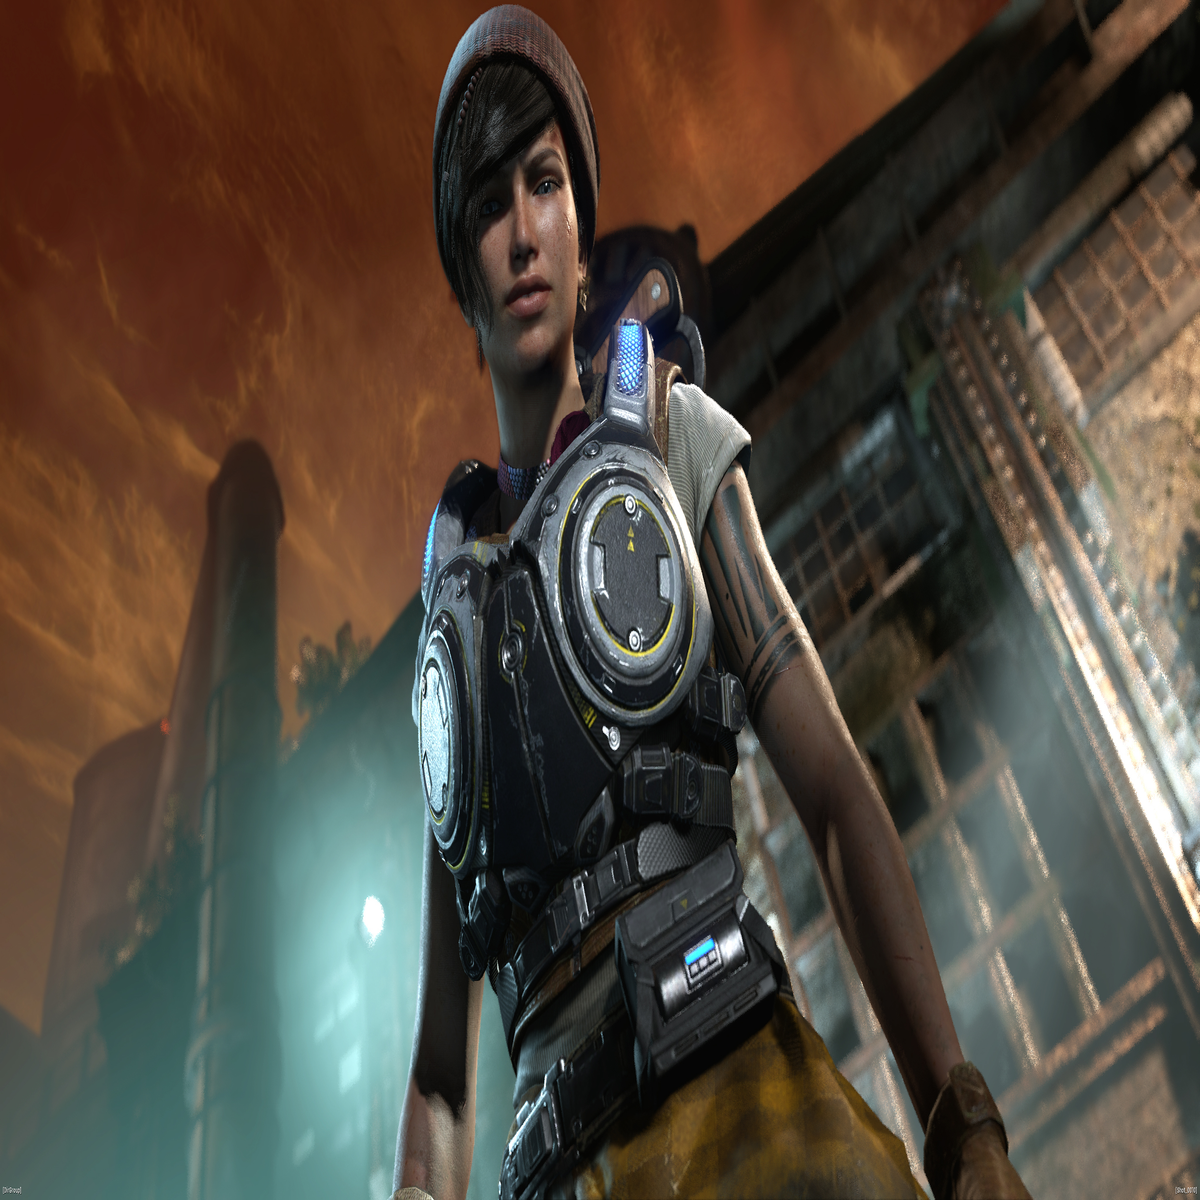 Gears Of War 4 Preview - Character Breakdown: Meet The New Gears